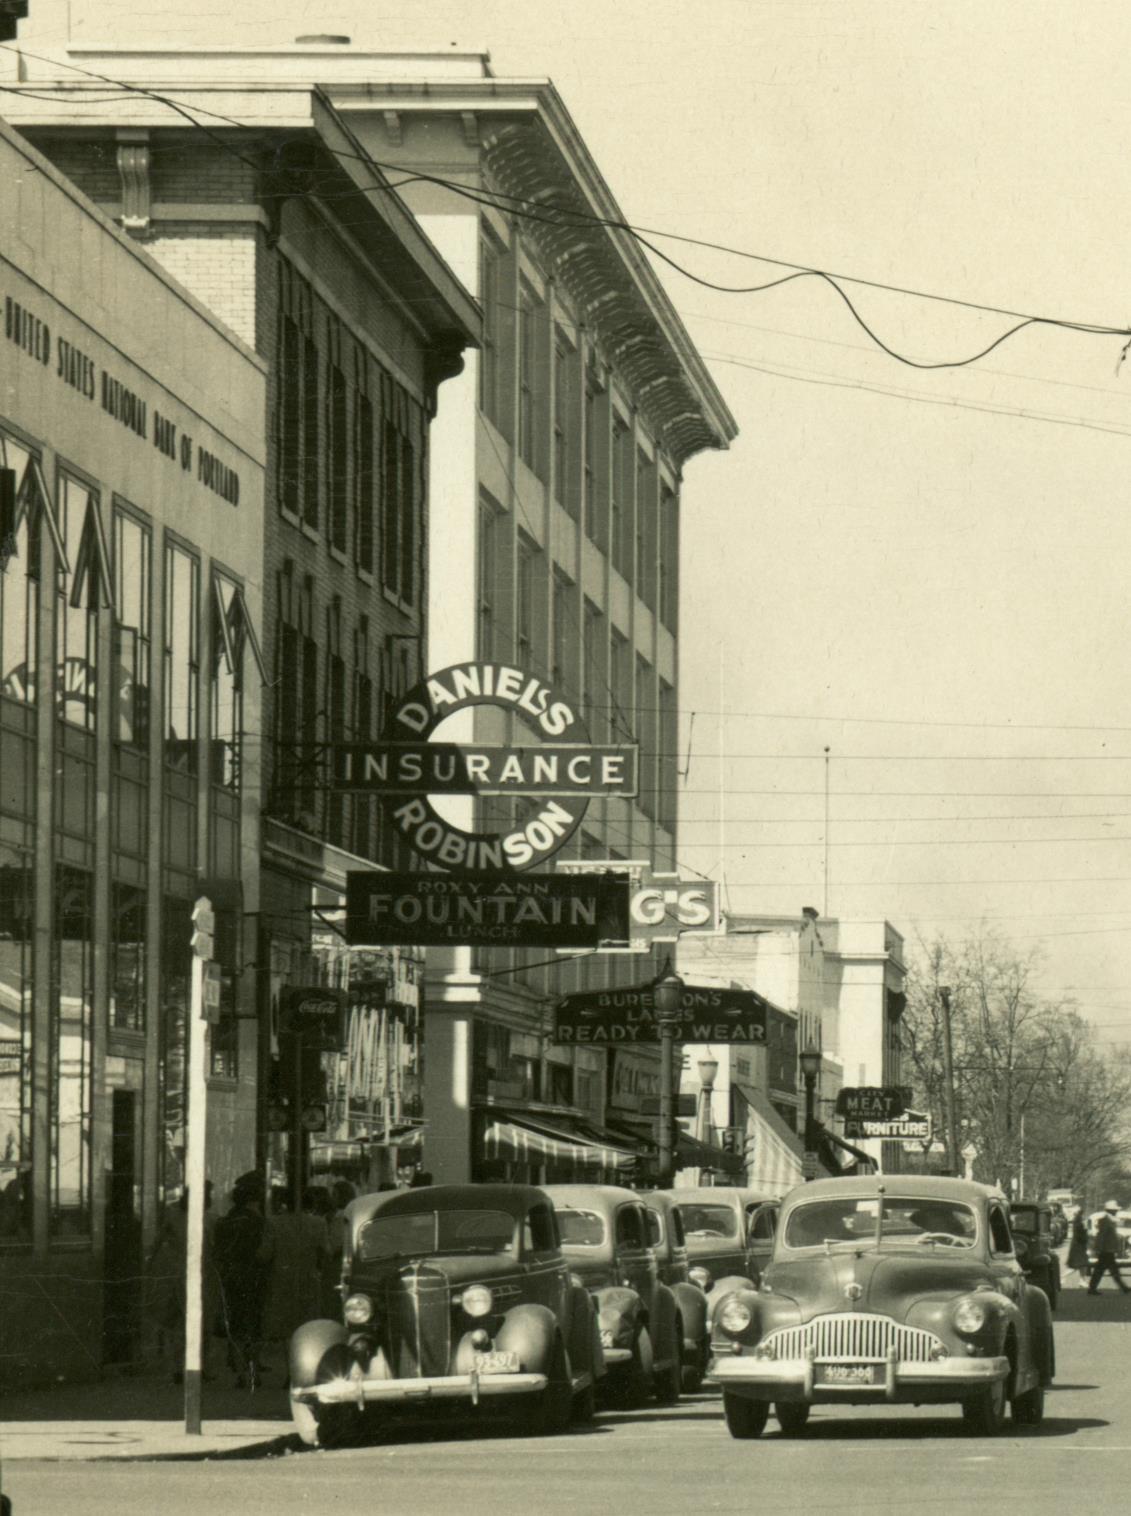 Daniels-Robinson Insurance sign, North Central, Medford, Oregon 1938-45